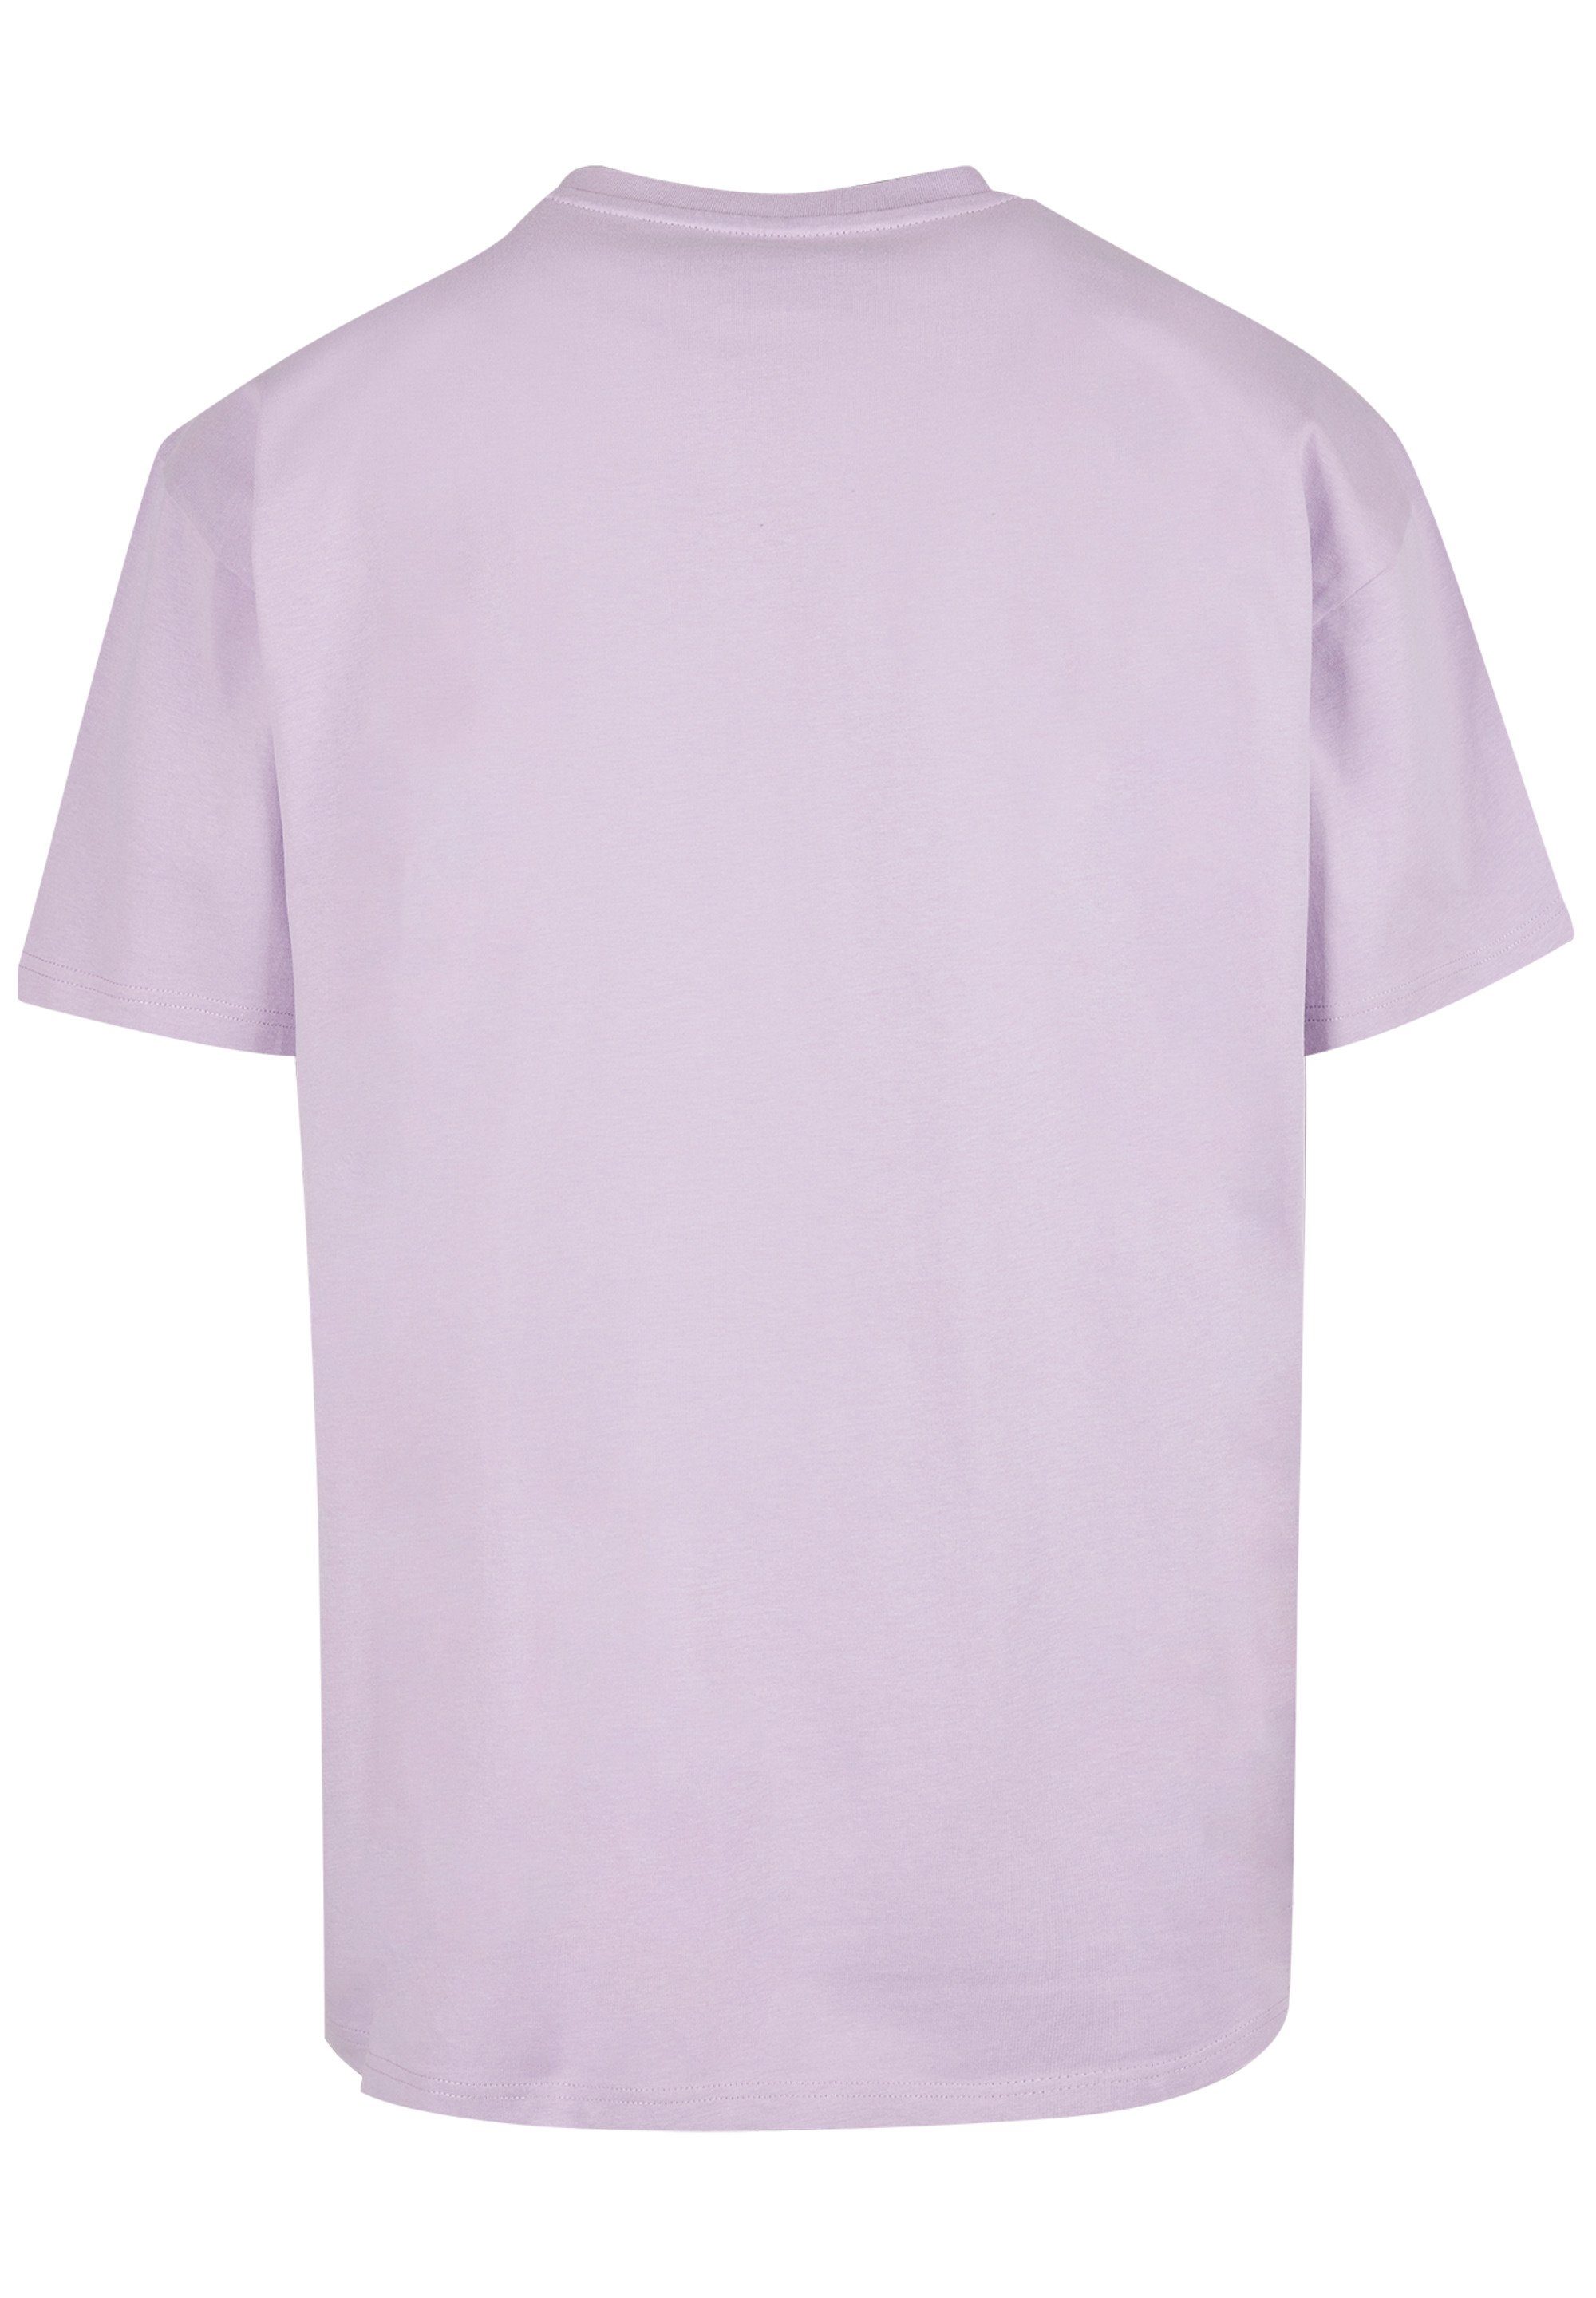 T-Shirt Schmetterling TEE F4NT4STIC OVERSIZE lilac Print Skull